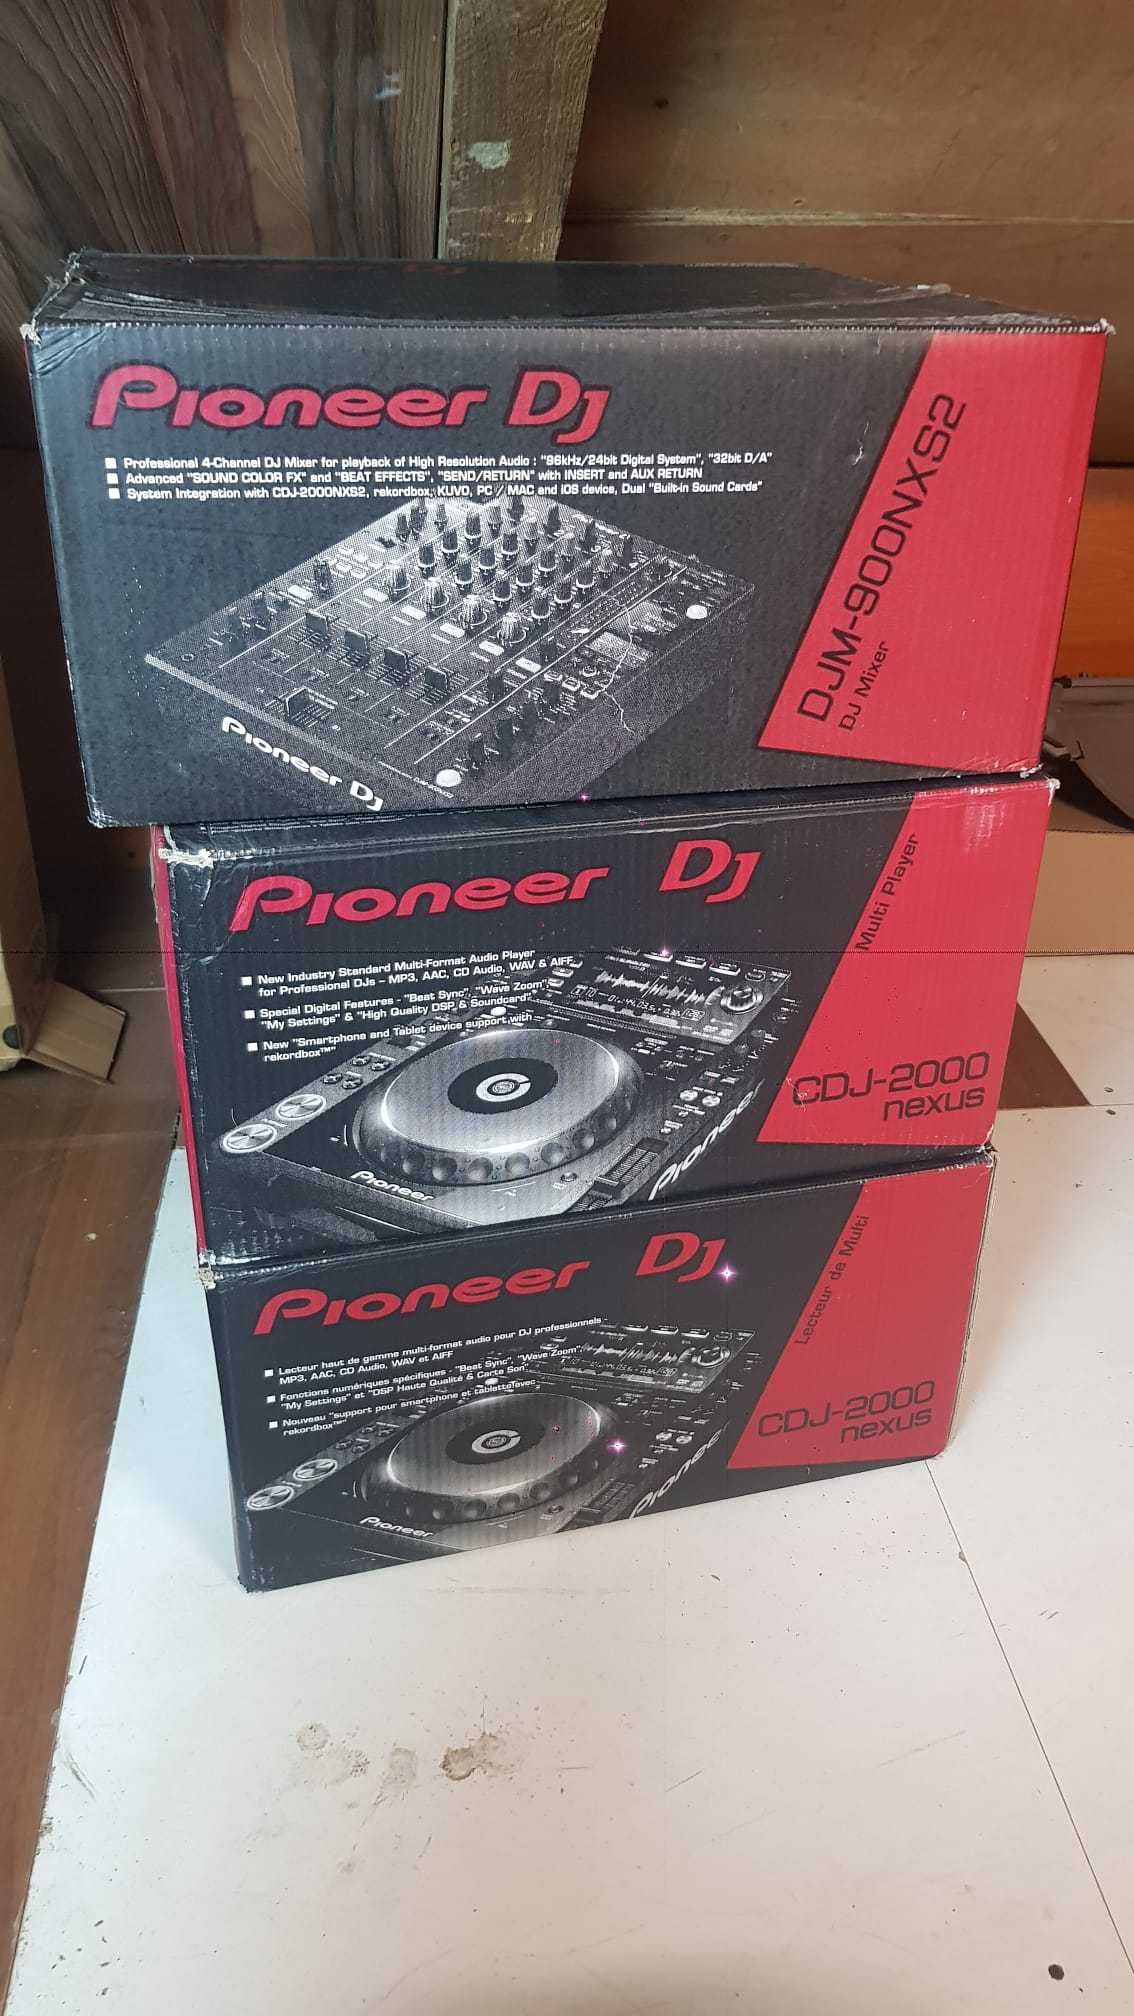 Pioneer CDJ 2000 nexus + DJM 900 nexus SRT Serato & Rekordbox + Case